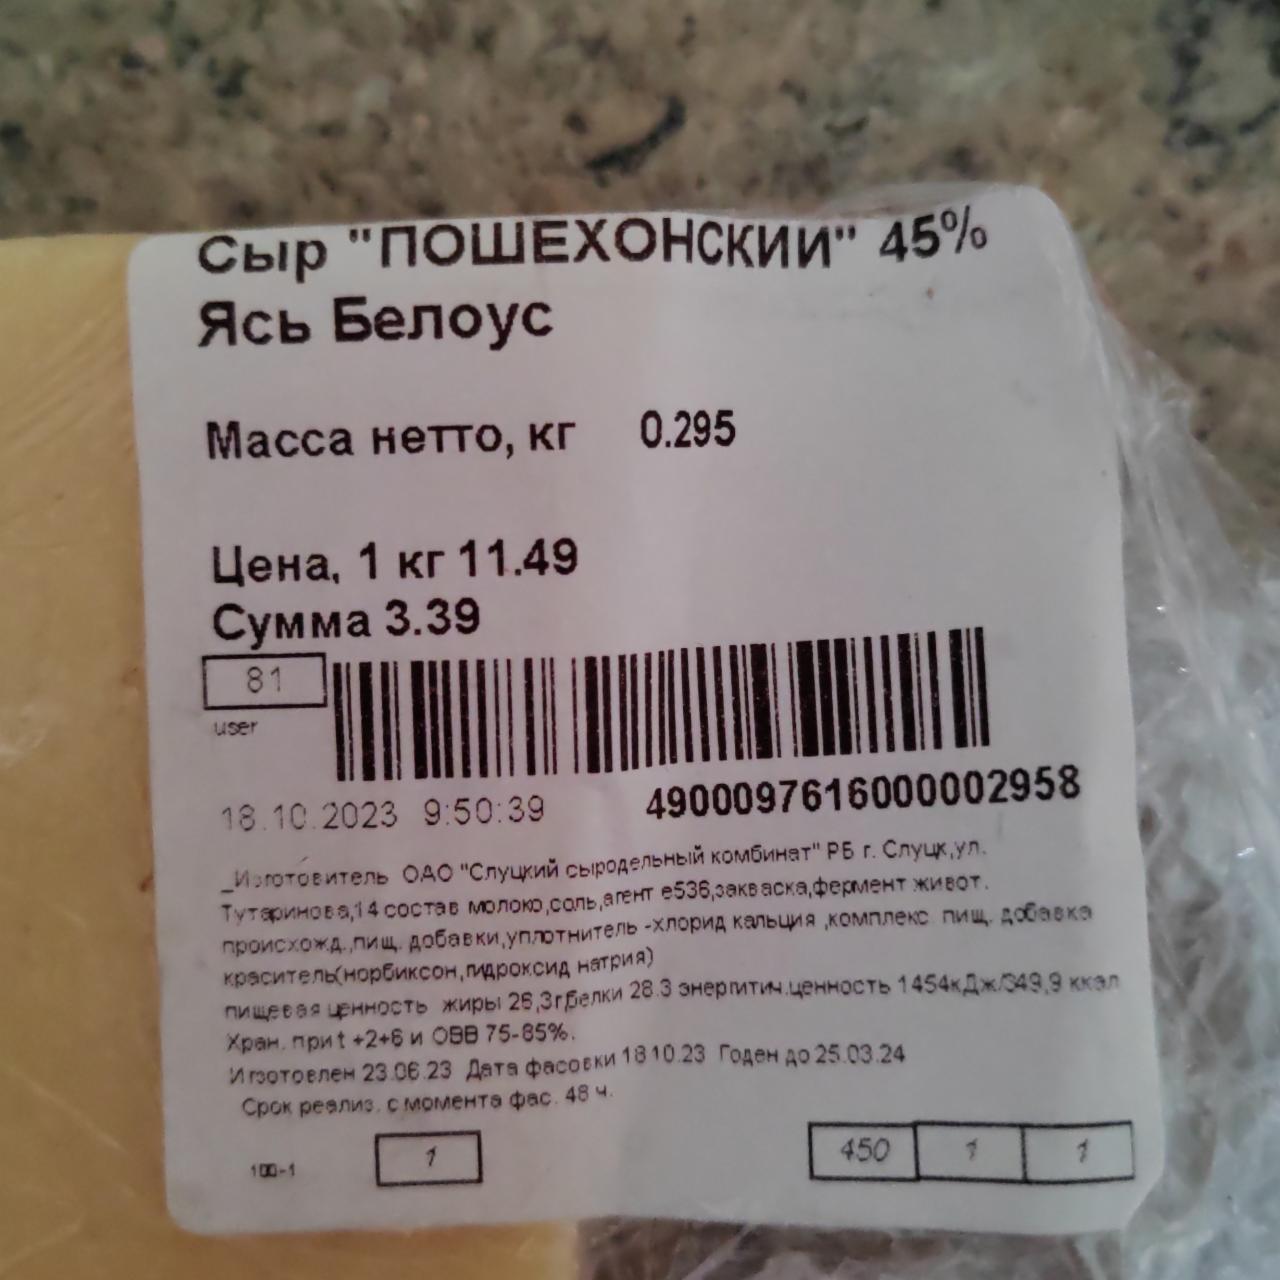 Фото - Сыр пошехонский 45% Ясь Белоус